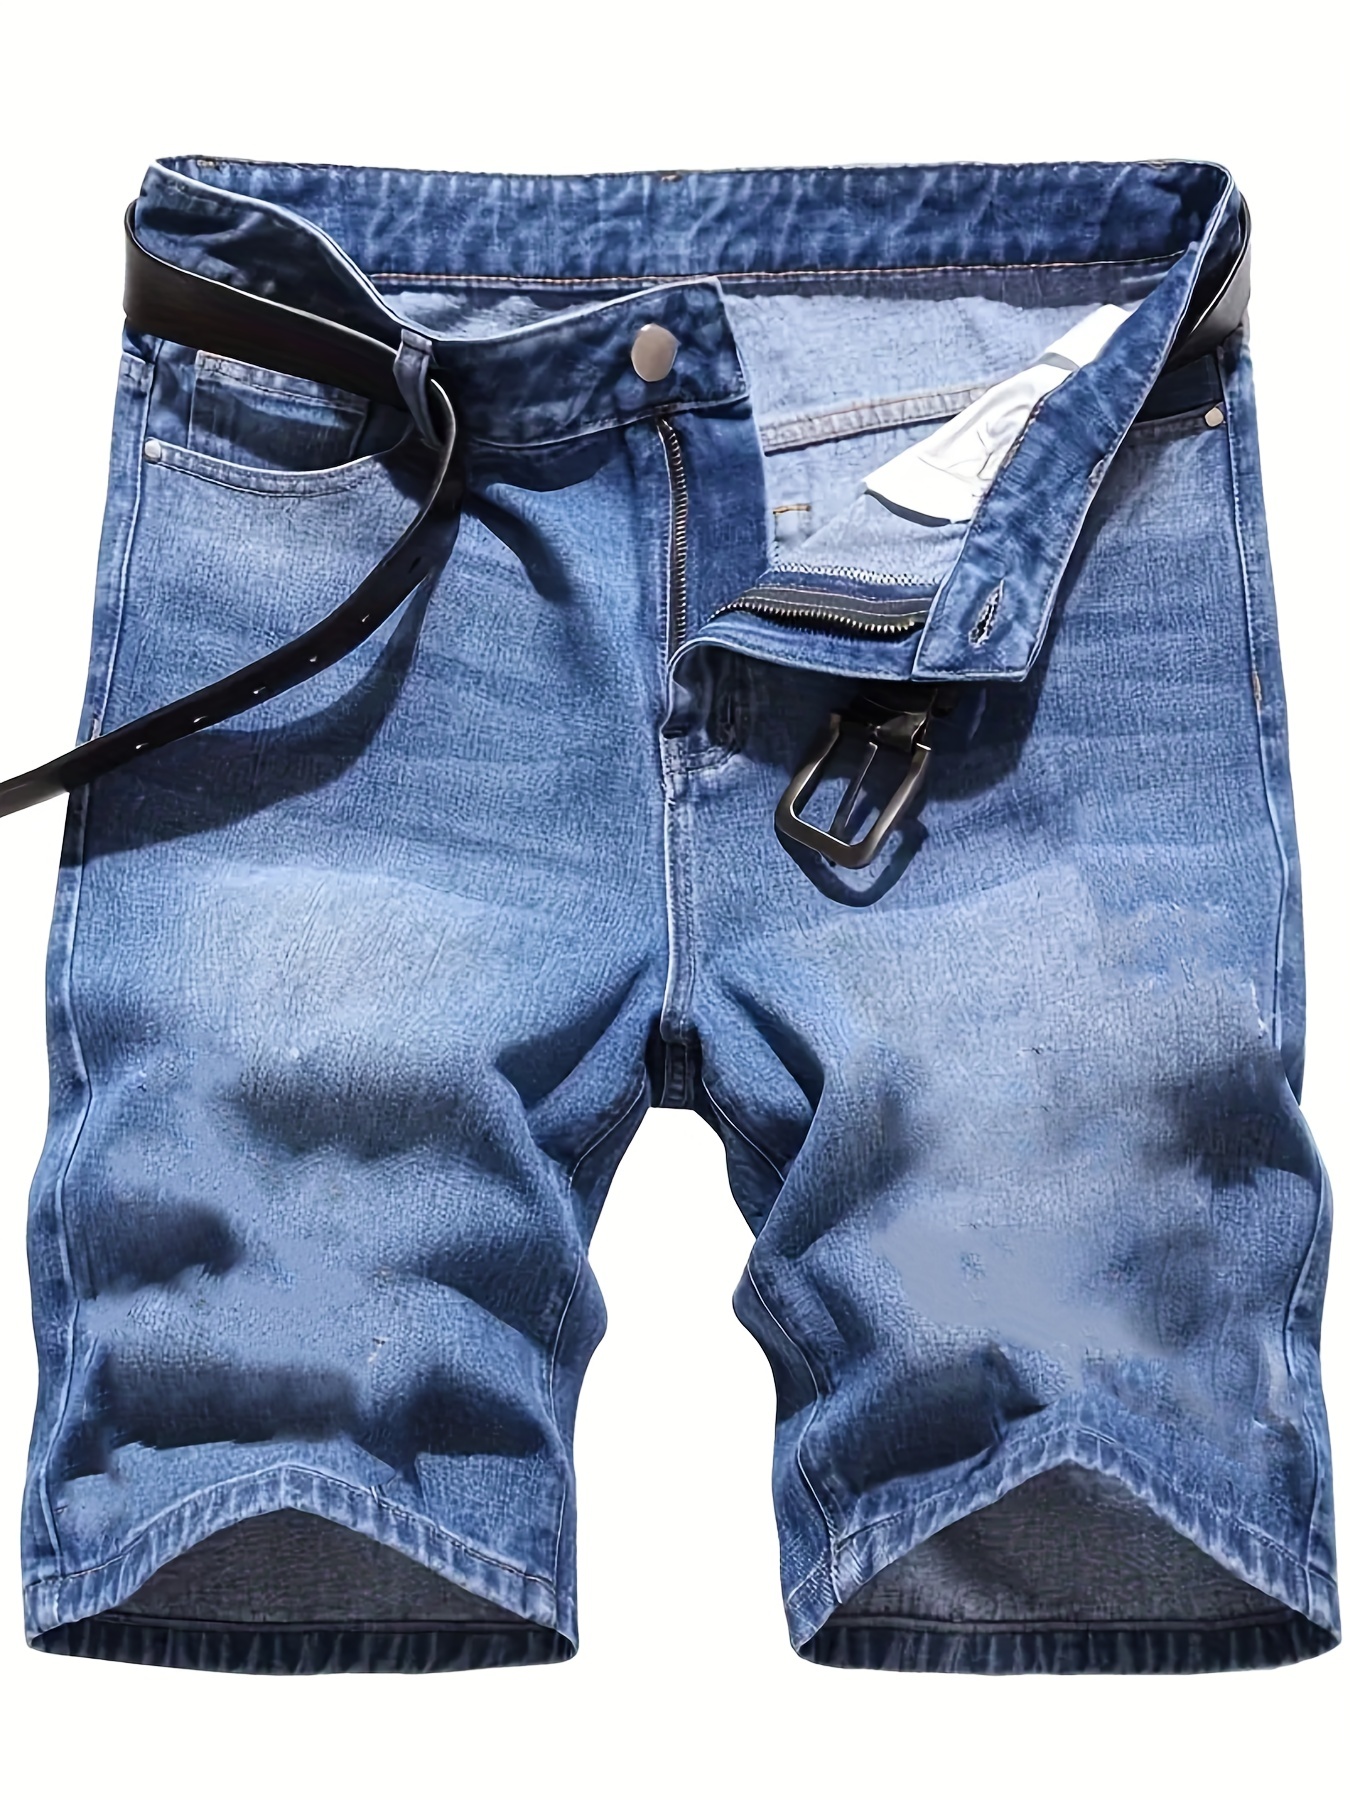 Men's Summer Denim Shorts Men Fashion Casual Washed Distressed Jeans Shorts  Pocket Regular Fit Denim Shorts Pants 